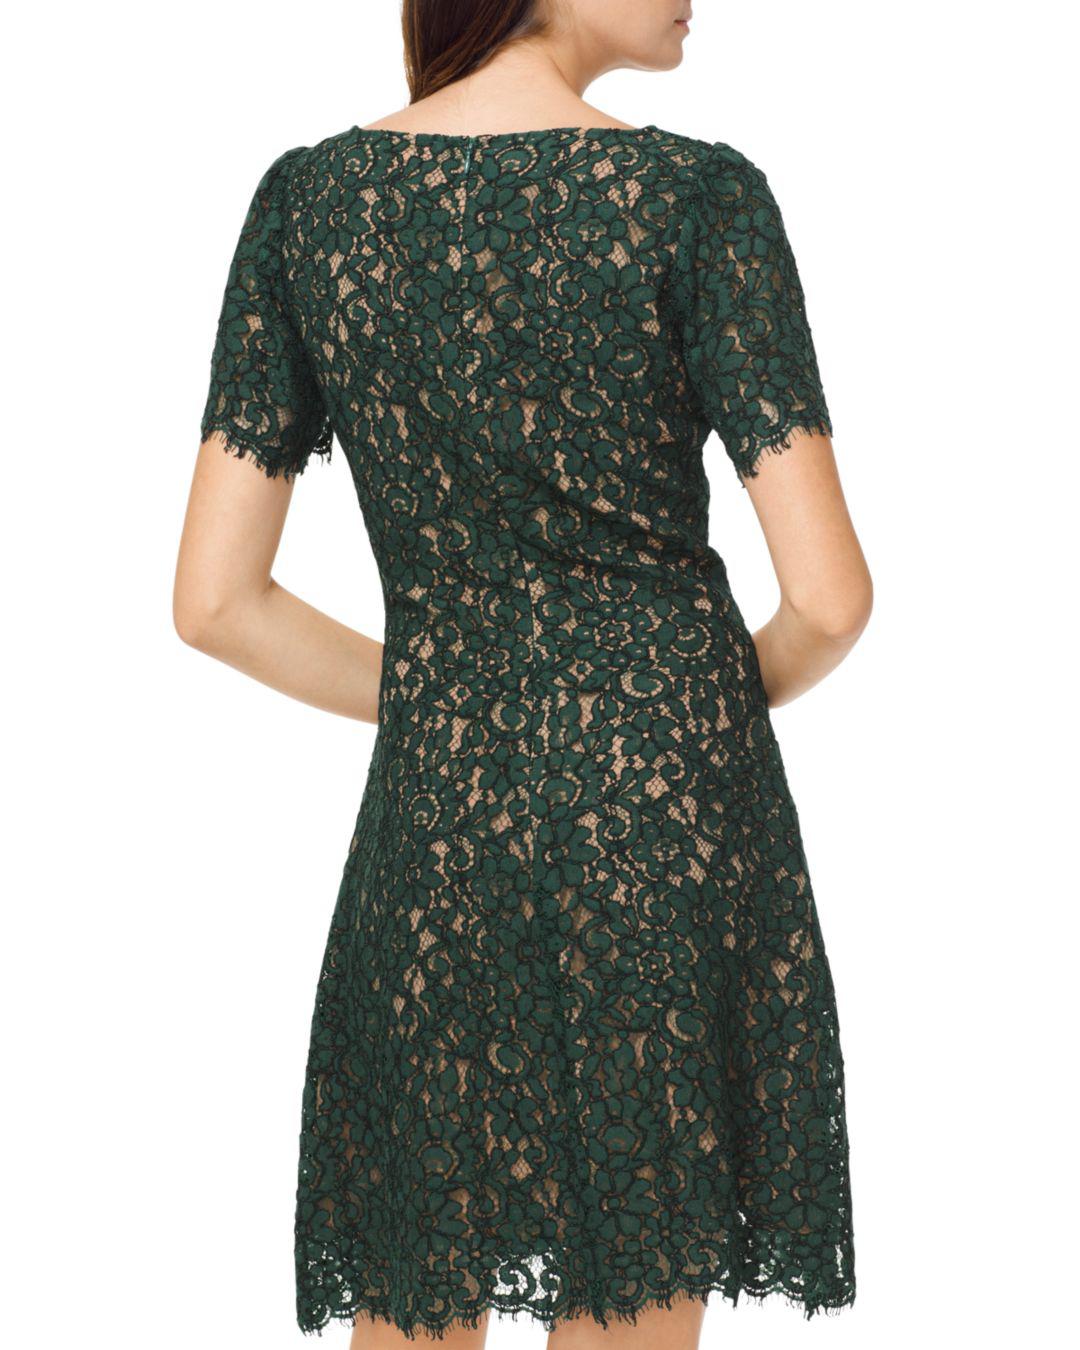 Michael Kors Corded Lace Dress in Dark Emerald (Green) - Lyst